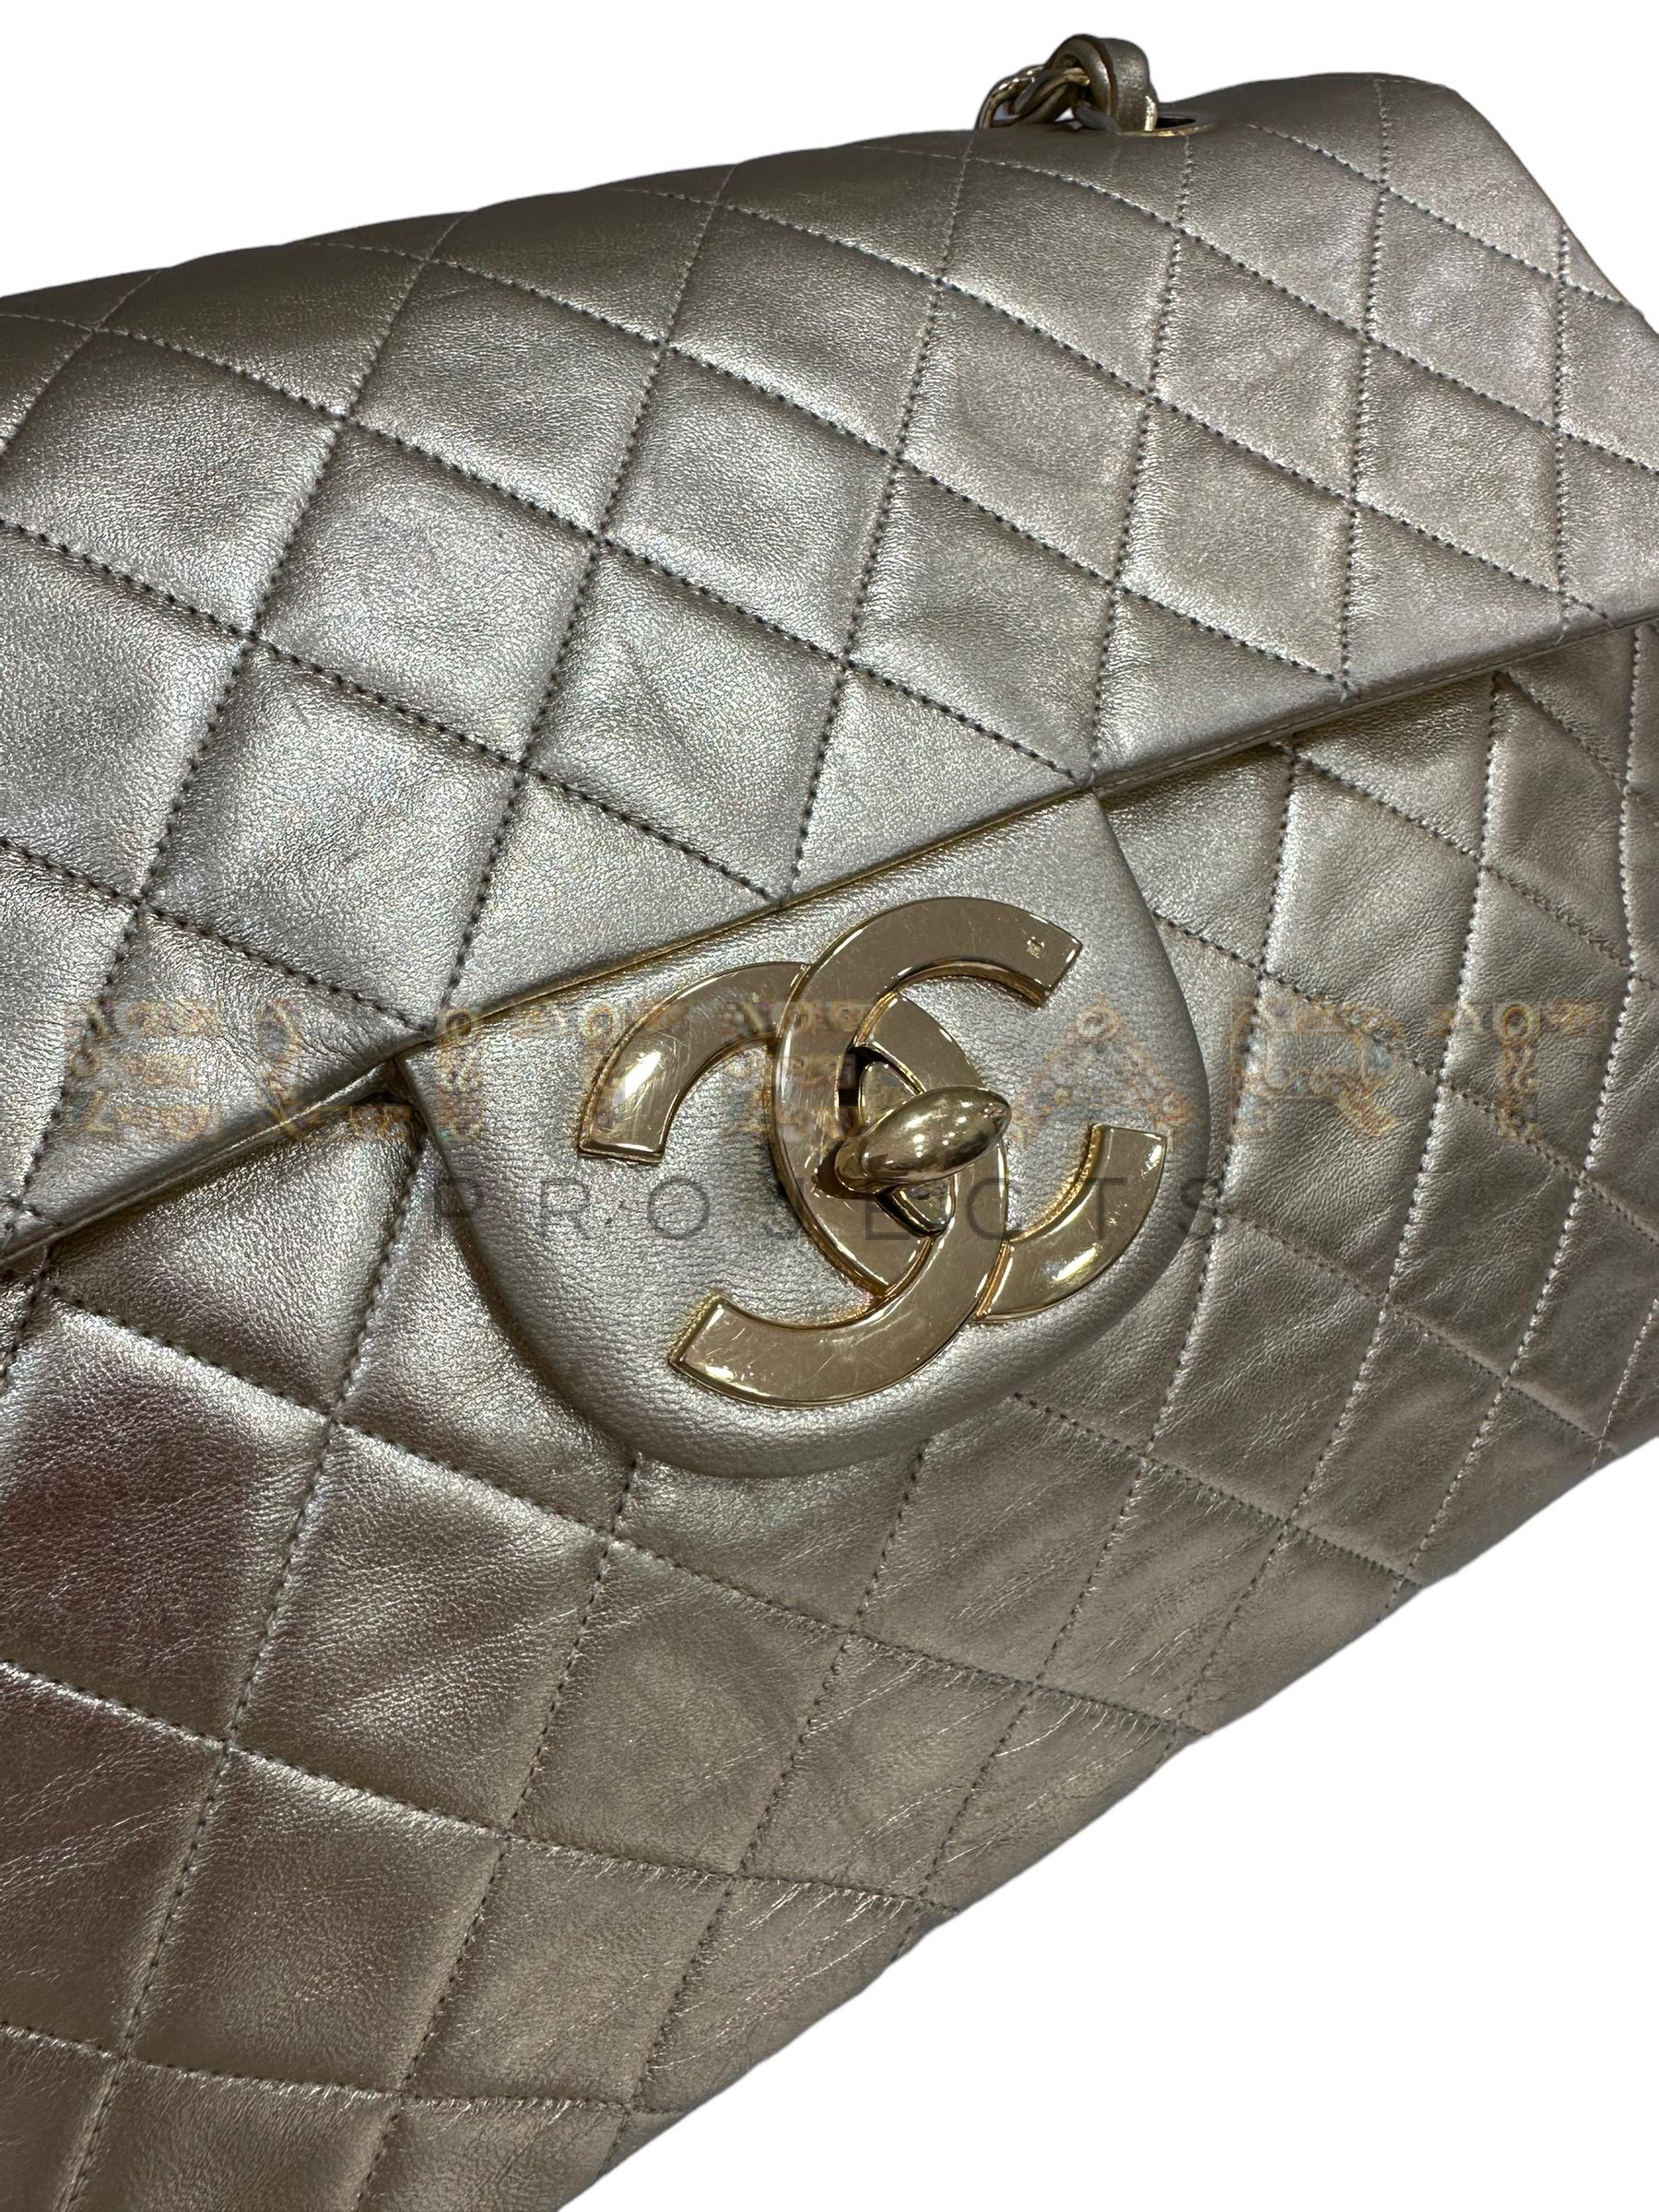 Chanel, Maxi Jumbo, vintage, Big Logo, bag, quilted, gold leather, gold hardware, CC logo, shoulder strap, good condition